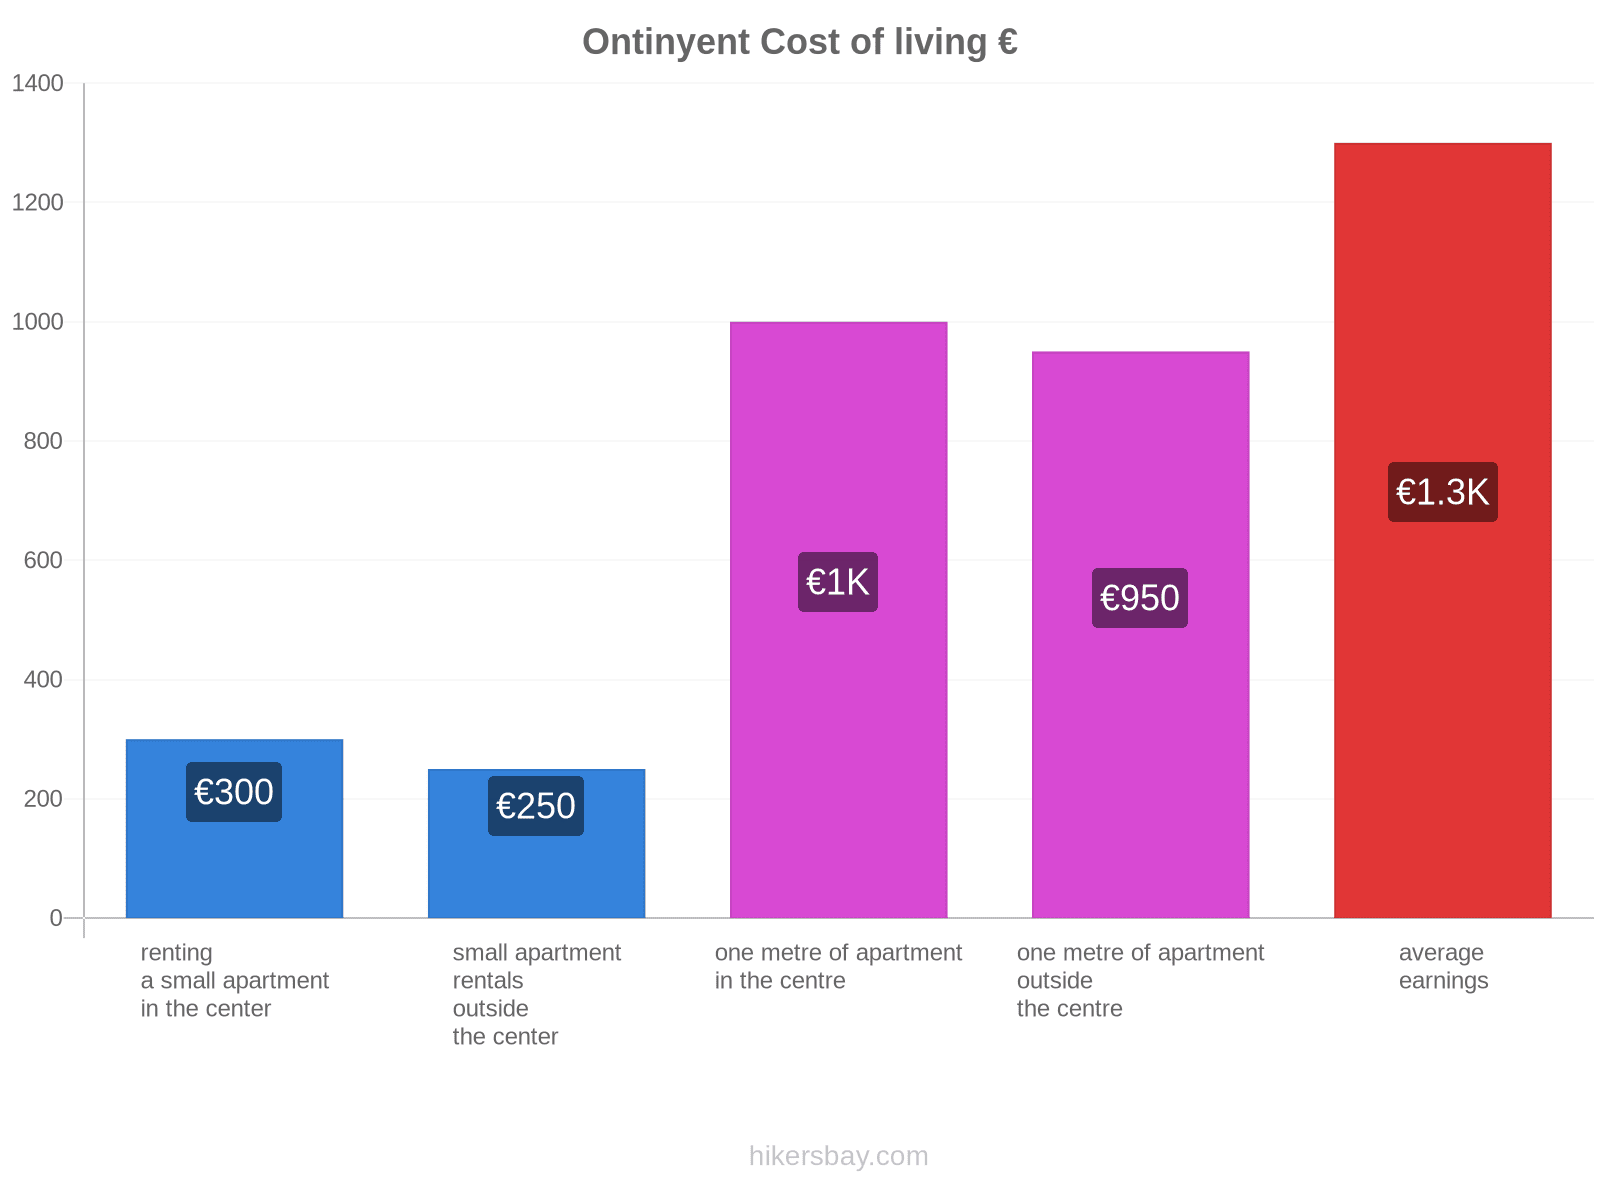 Ontinyent cost of living hikersbay.com